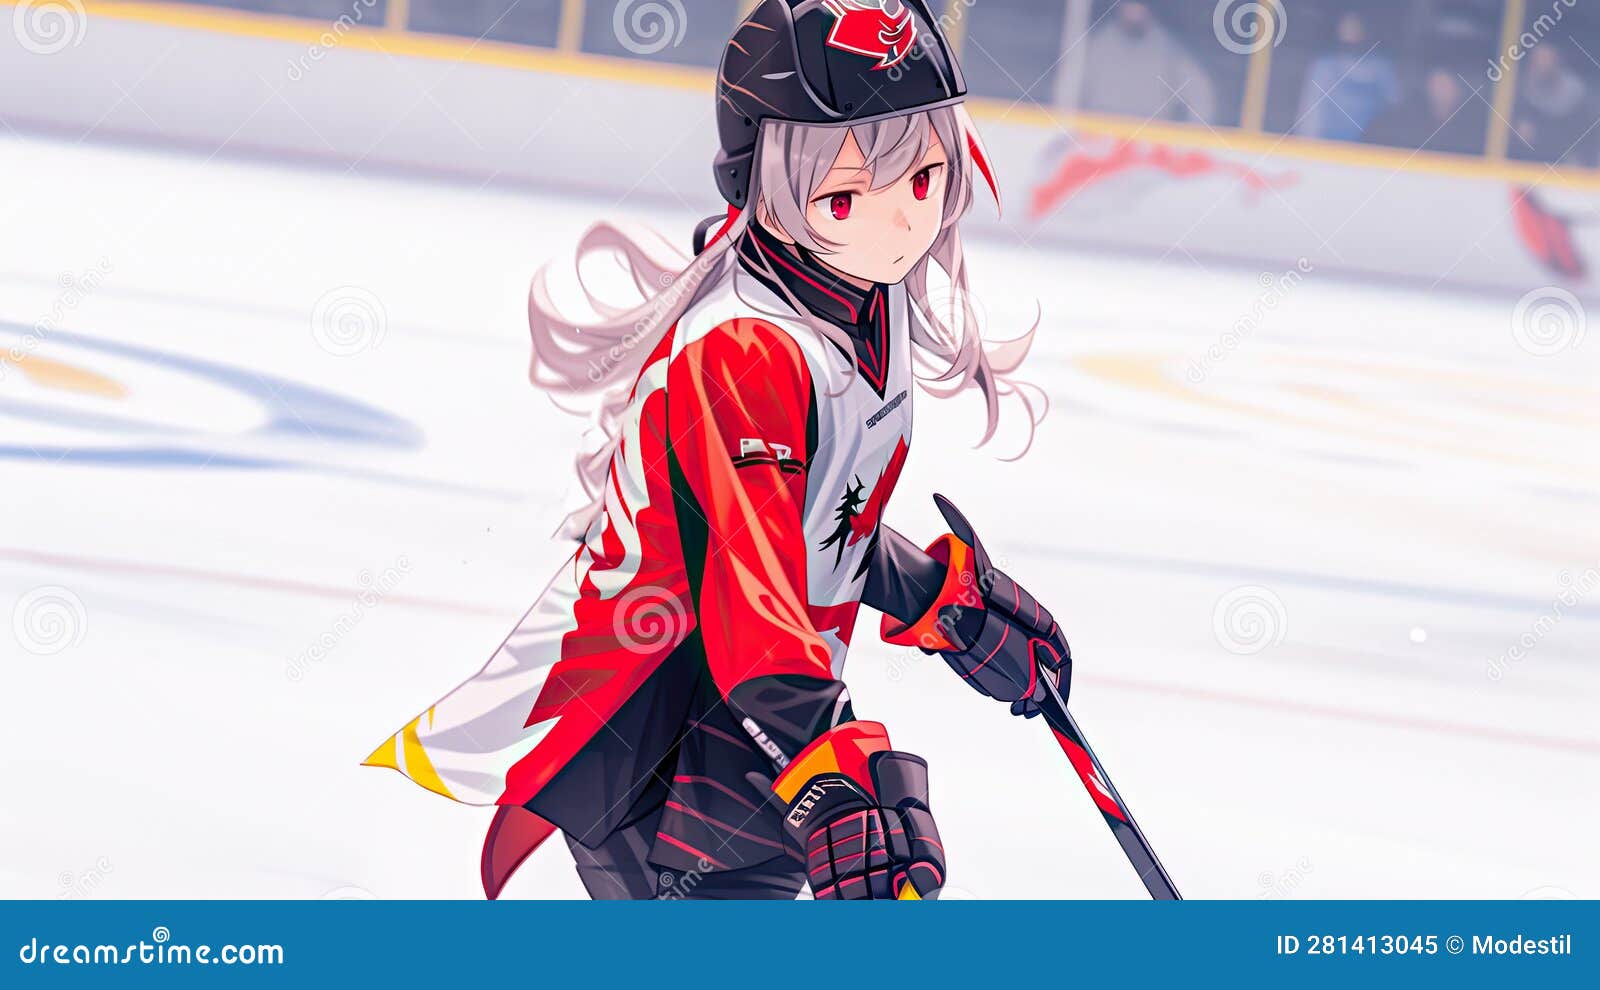 Best 10 Hockey Anime and Manga of All Time (List) - OtakusNotes